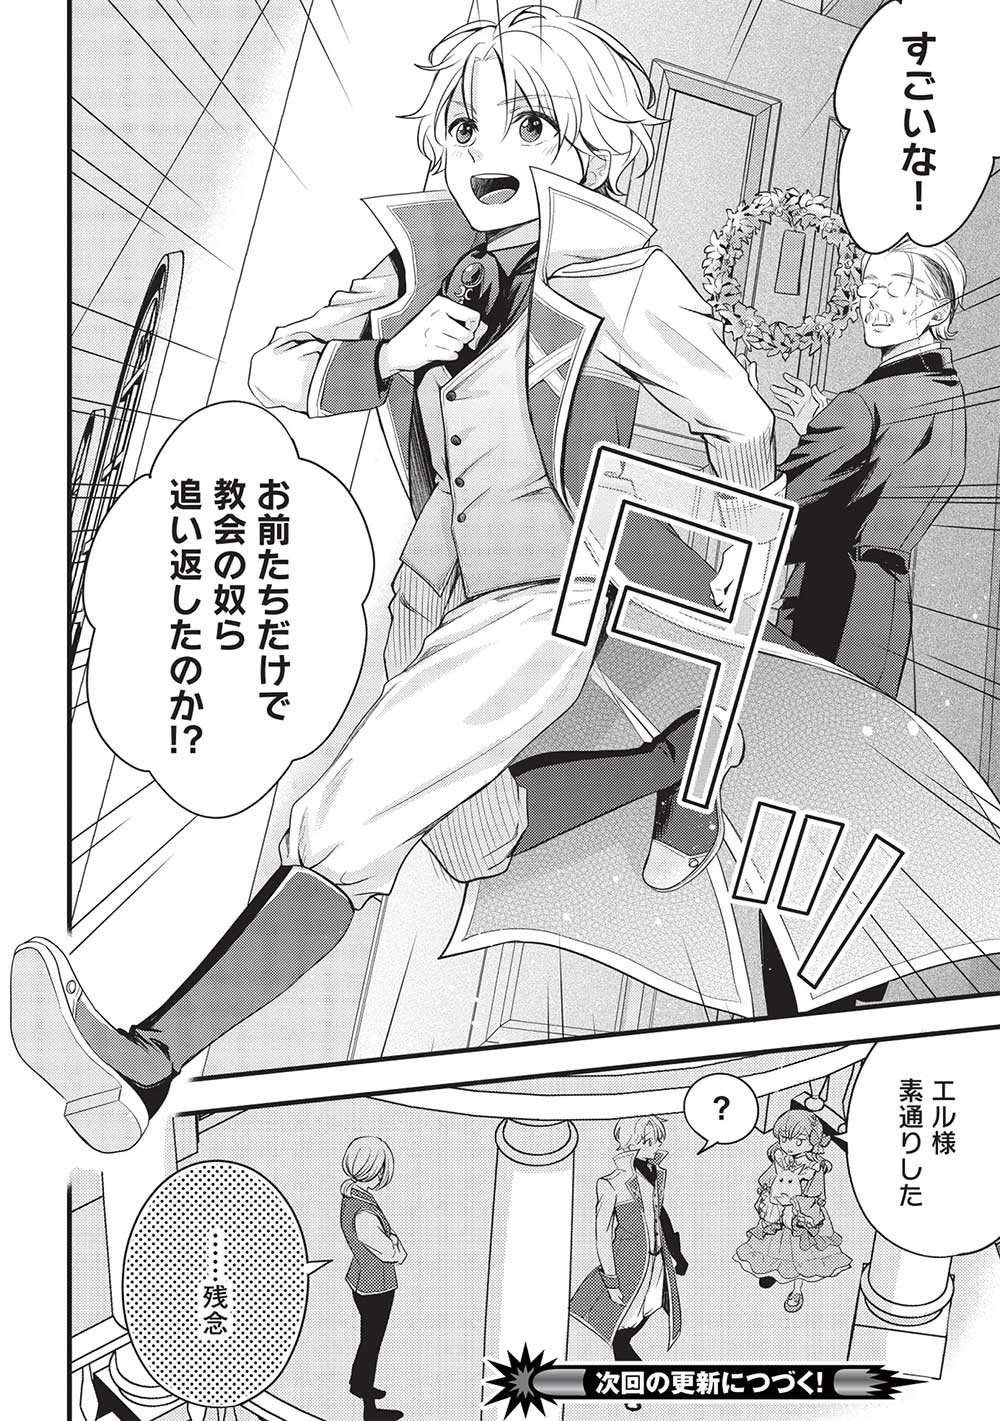 Grand Avail – Omamori no Madoushi wa Saioshi Last Boss Onii-sama wo Sukuitai - Chapter 10 - Page 34